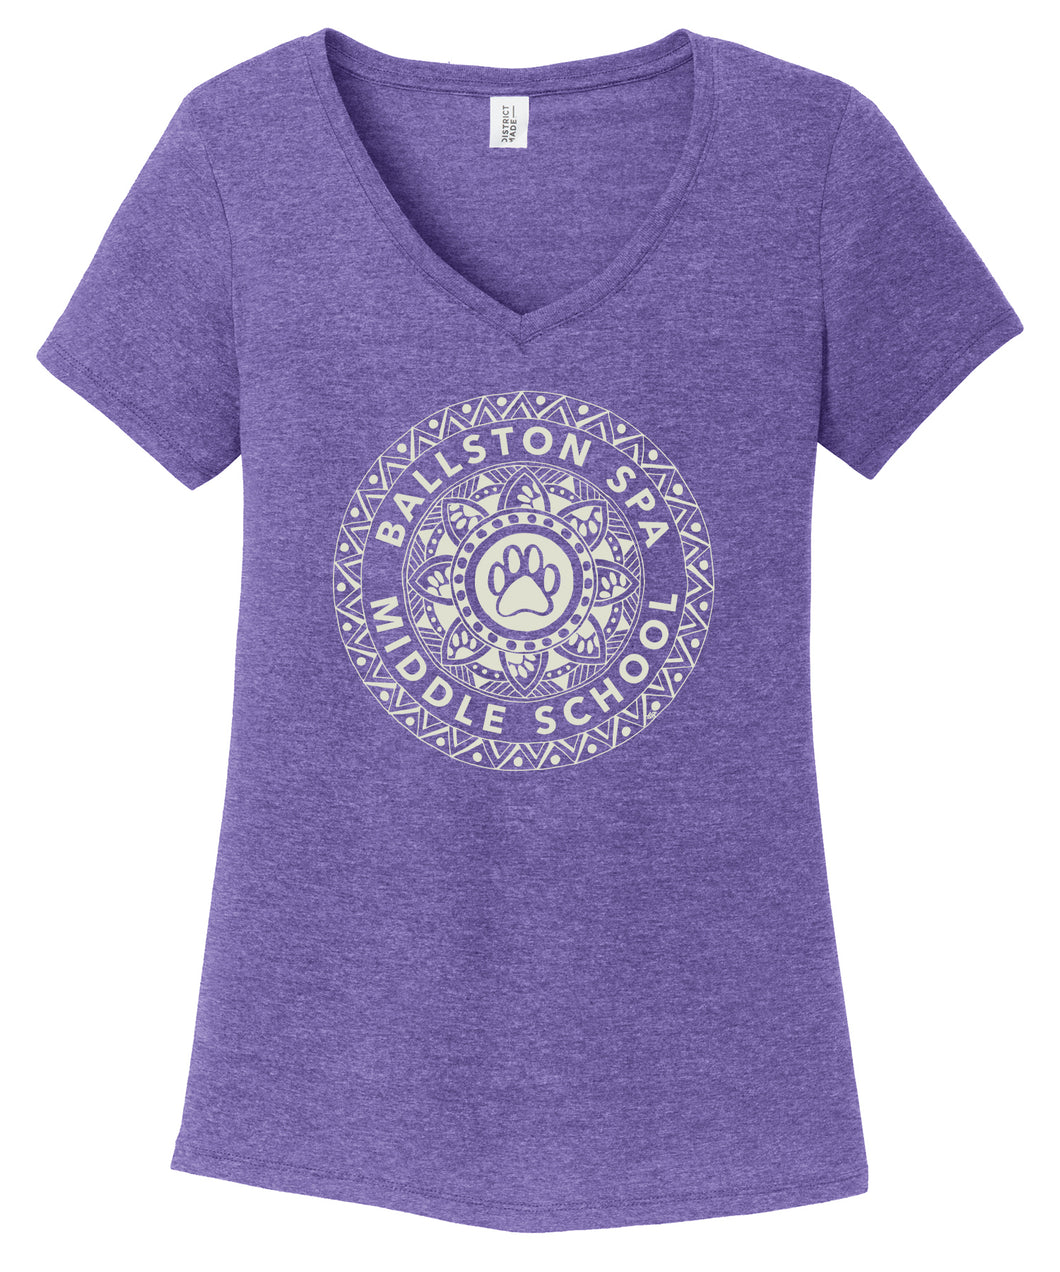 BSCSD Middle School Women's V-neck T-shirt - Purple (provides 12 meals)